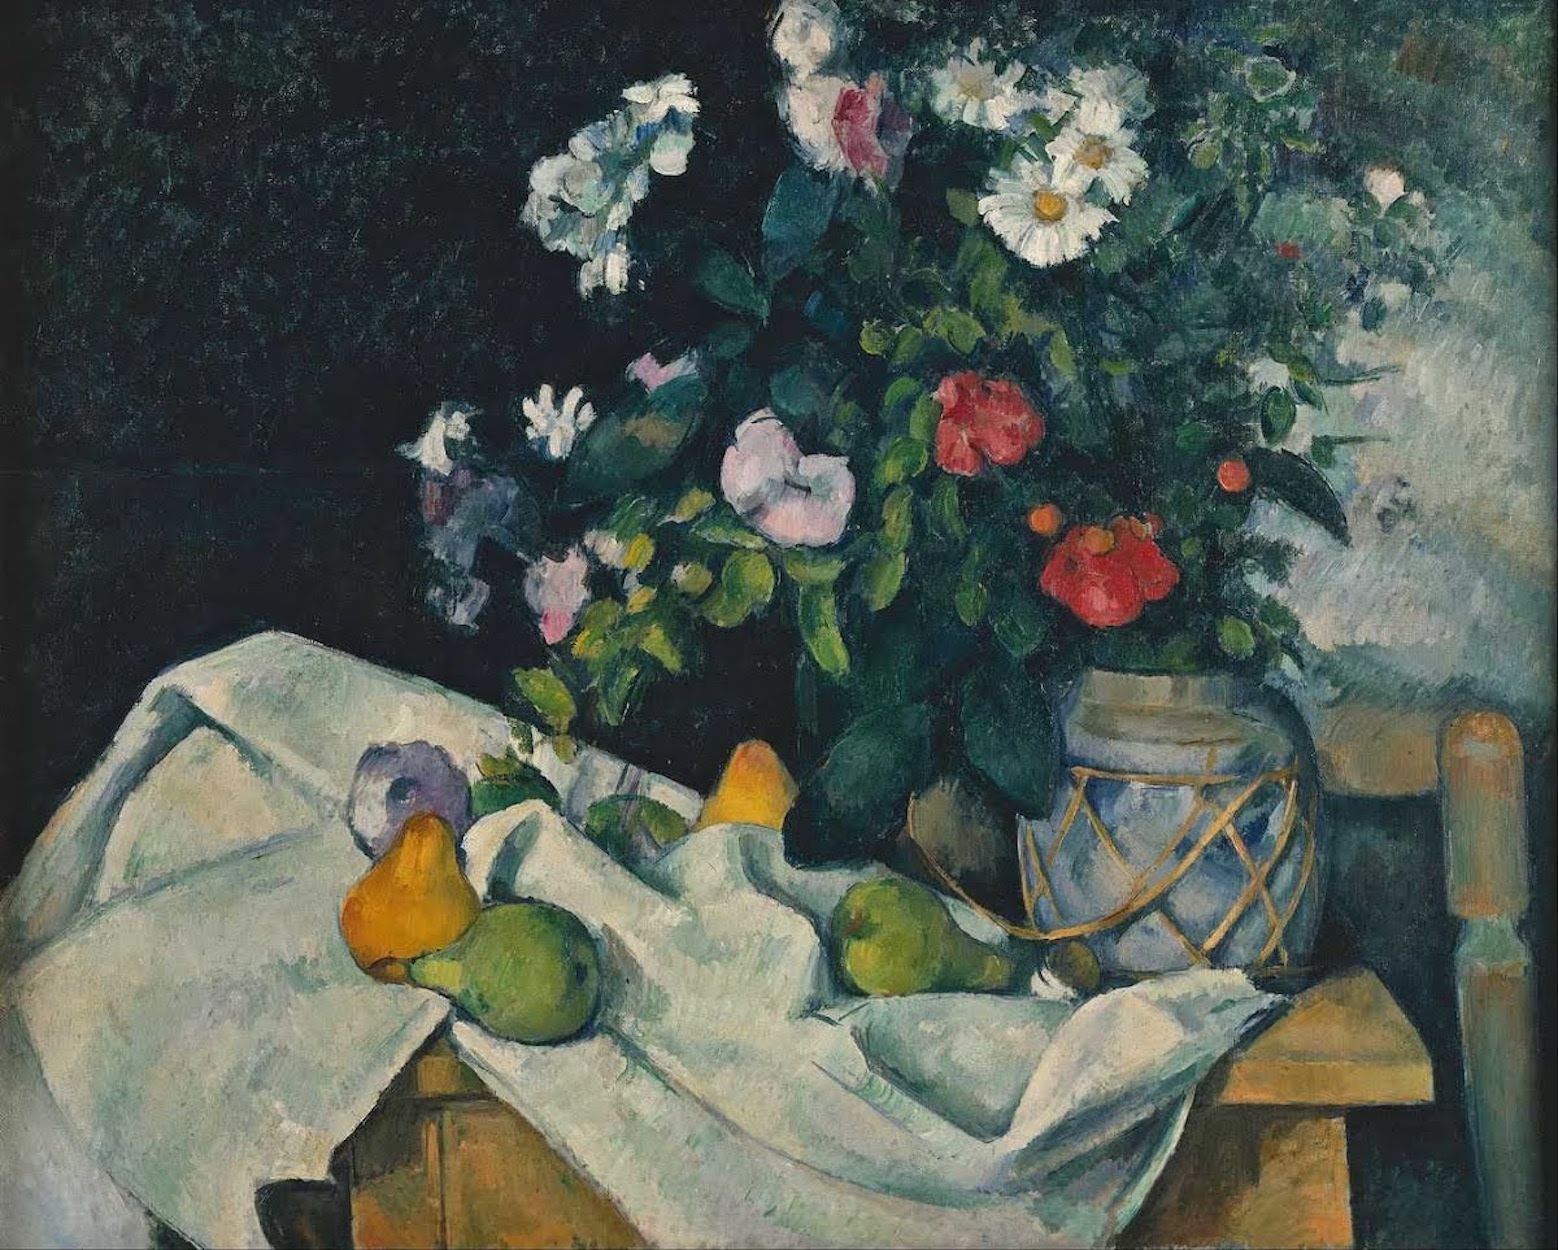 Натюрморт с цветами и фруктами by Paul Cézanne - Около 1890 г. - 83,0 x 65,5 см 